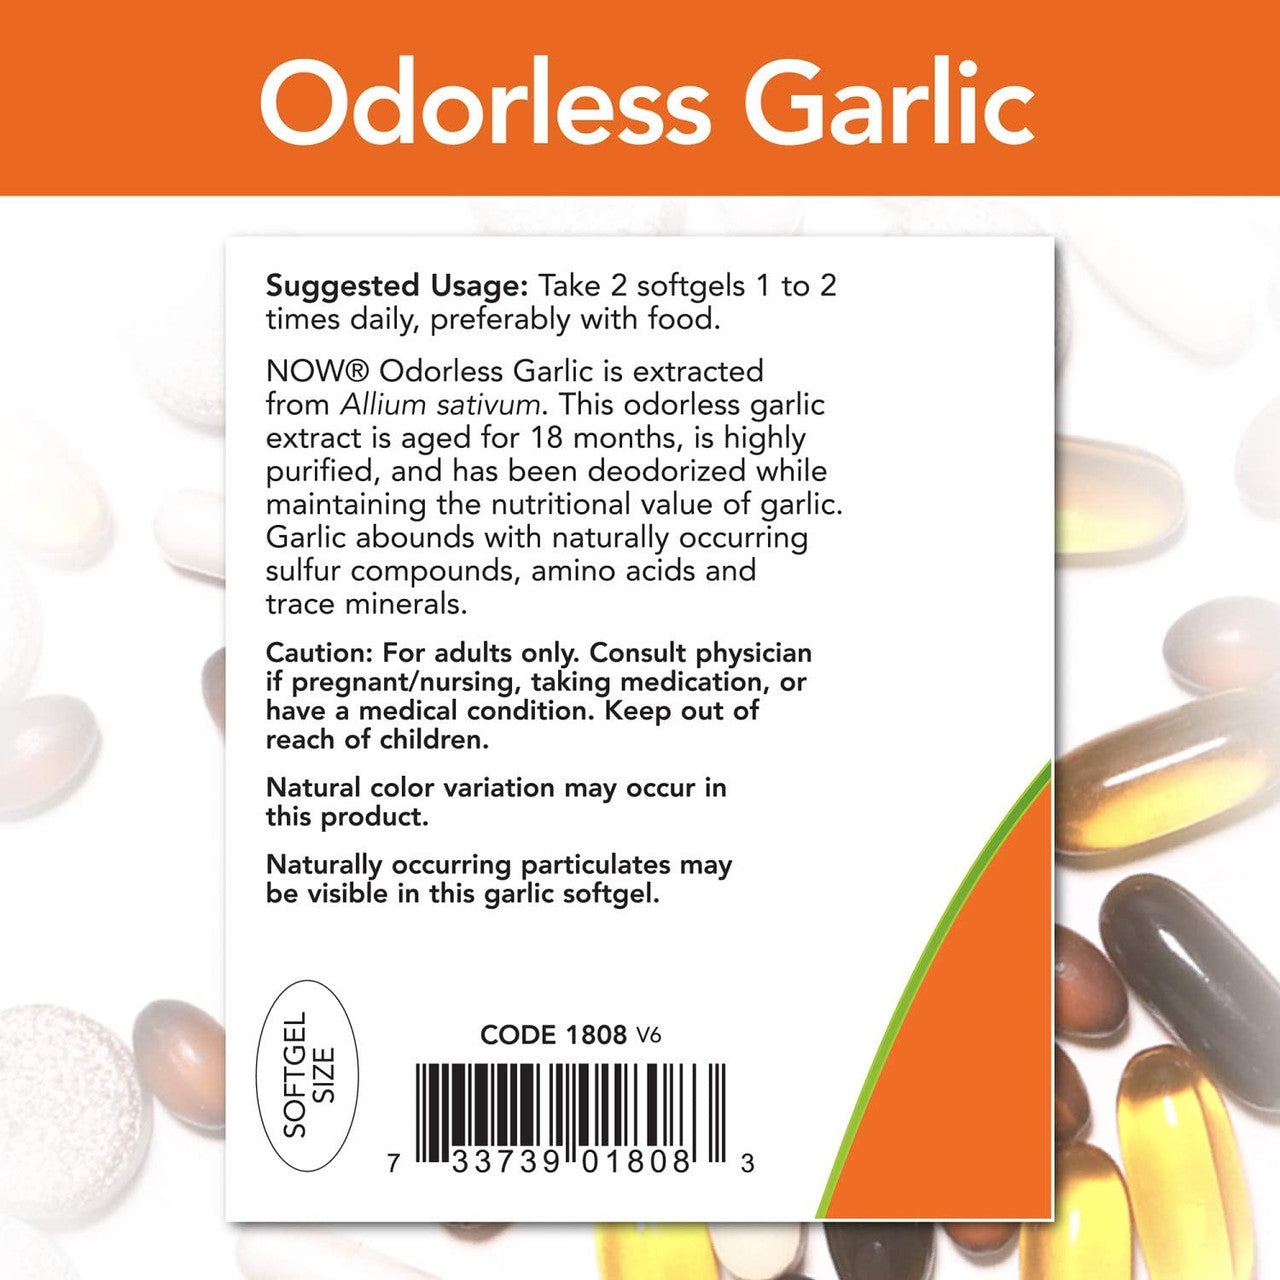 Now Odorless Garlic directions